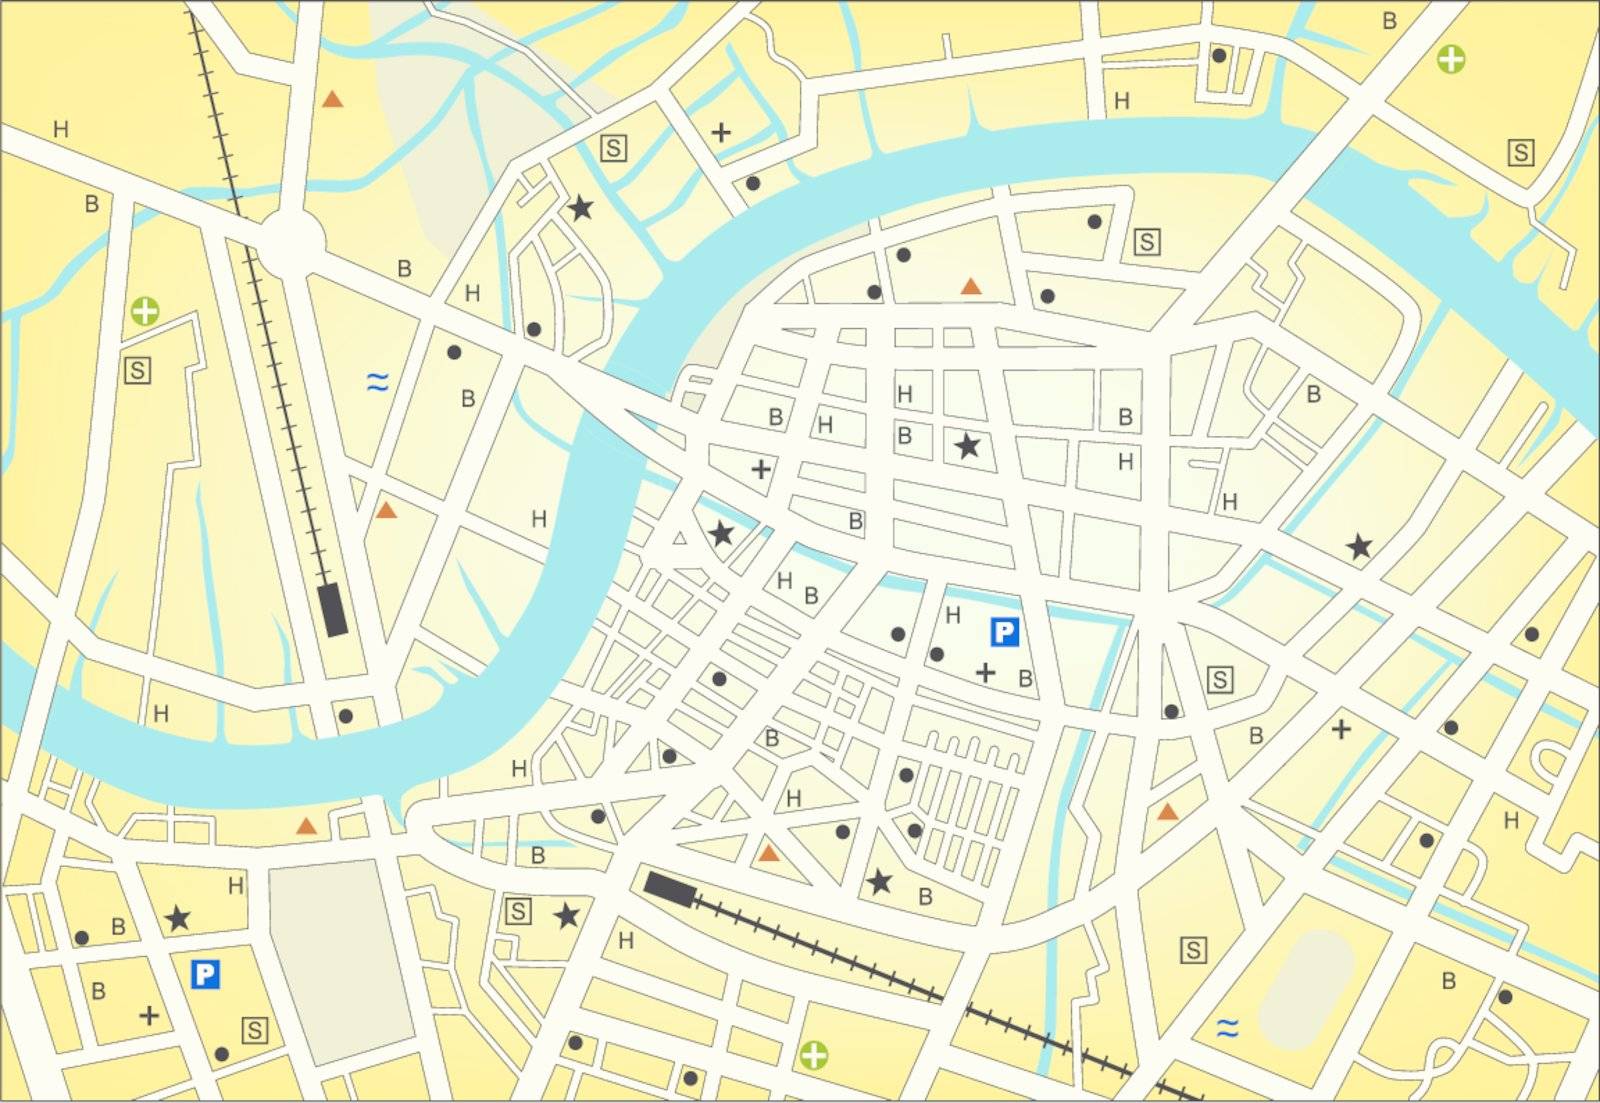 City streetmap by Tawng